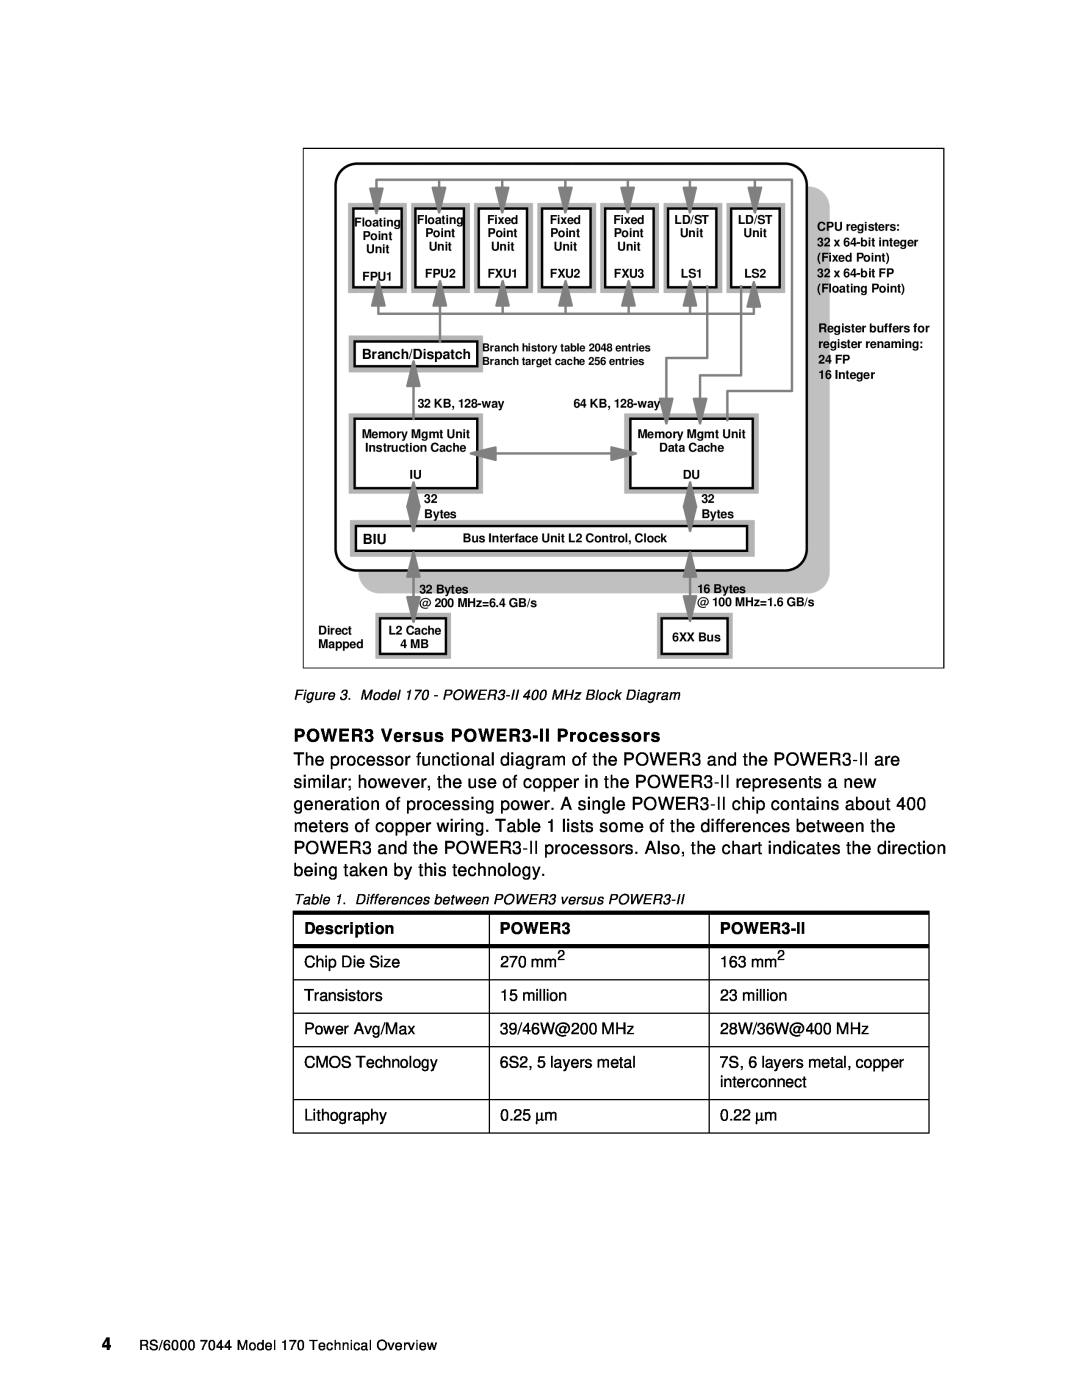 IBM 170 manual POWER3 Versus POWER3-II Processors, Description 